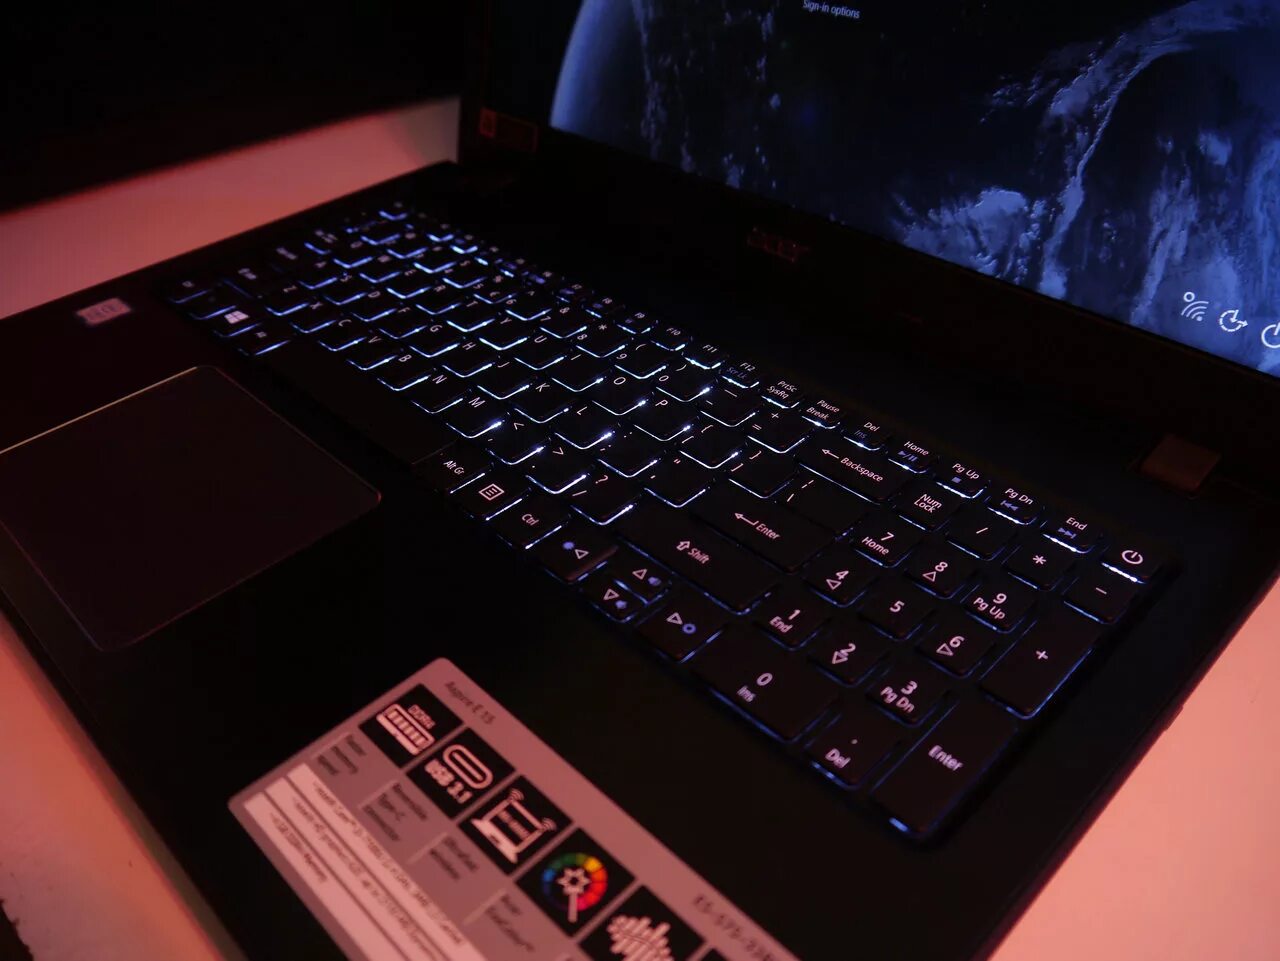 Acer Aspire e15 Keyboard. Aspire 7 Keyboard Light. Acer e5 15 клавиатура. Acer Aspire 5 с подсветкой.